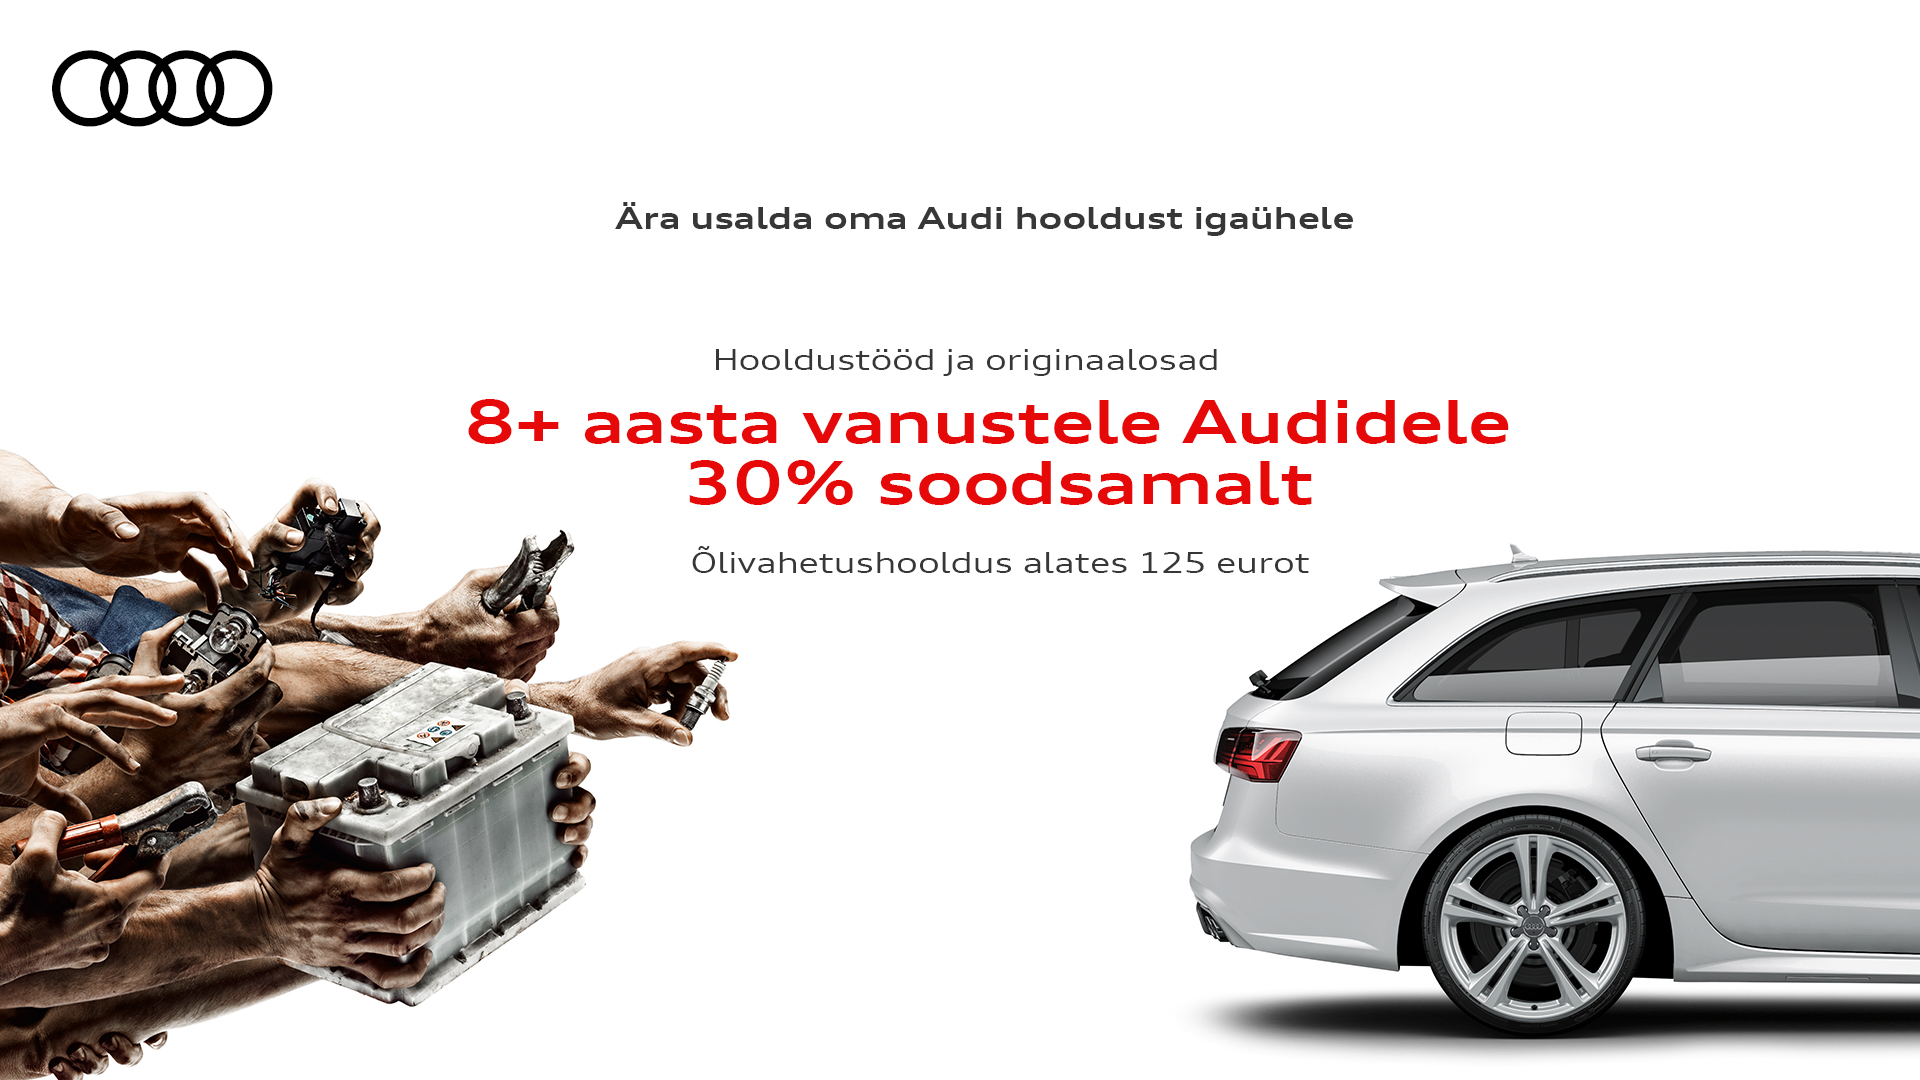 Audi-service kampaania-FN-1920X1080.jpg